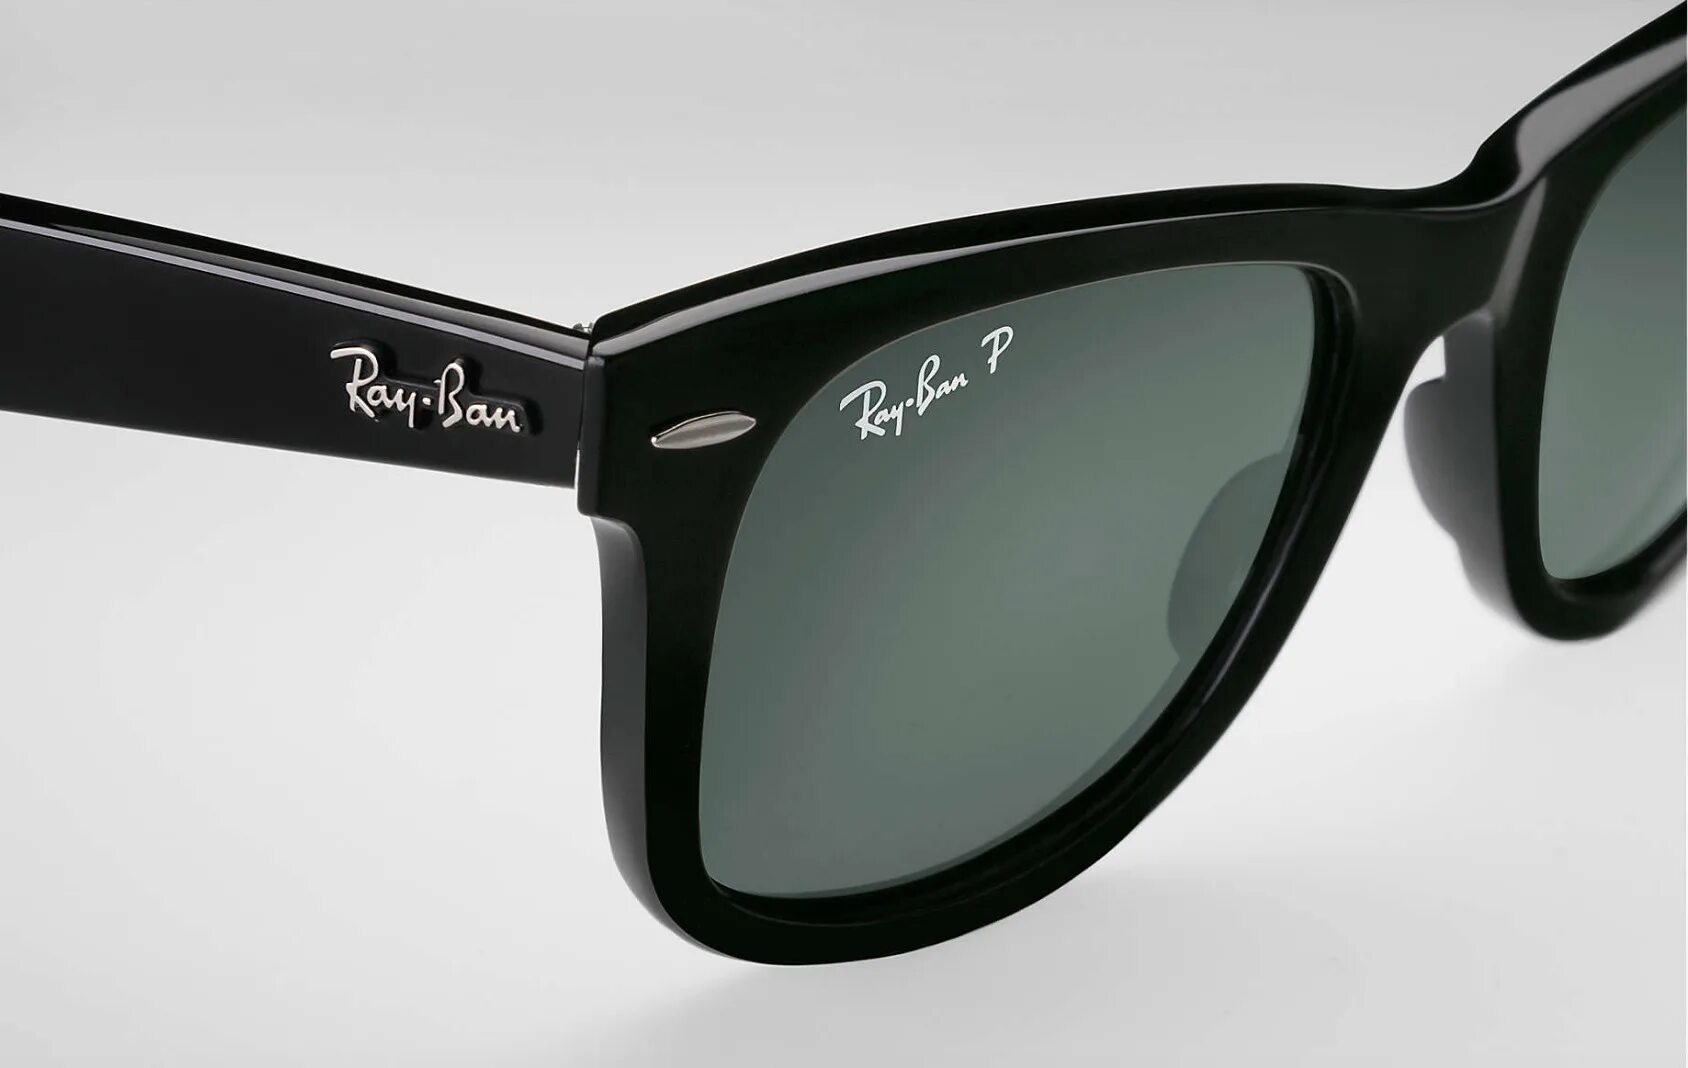 Ray ban rb5449. Очки ray ban Wayfarer. Ray ban очки rb3561. Ray-ban солнцезащитные очки rb4306. Купить очки солнцезащитные мужские брендовые looktrue